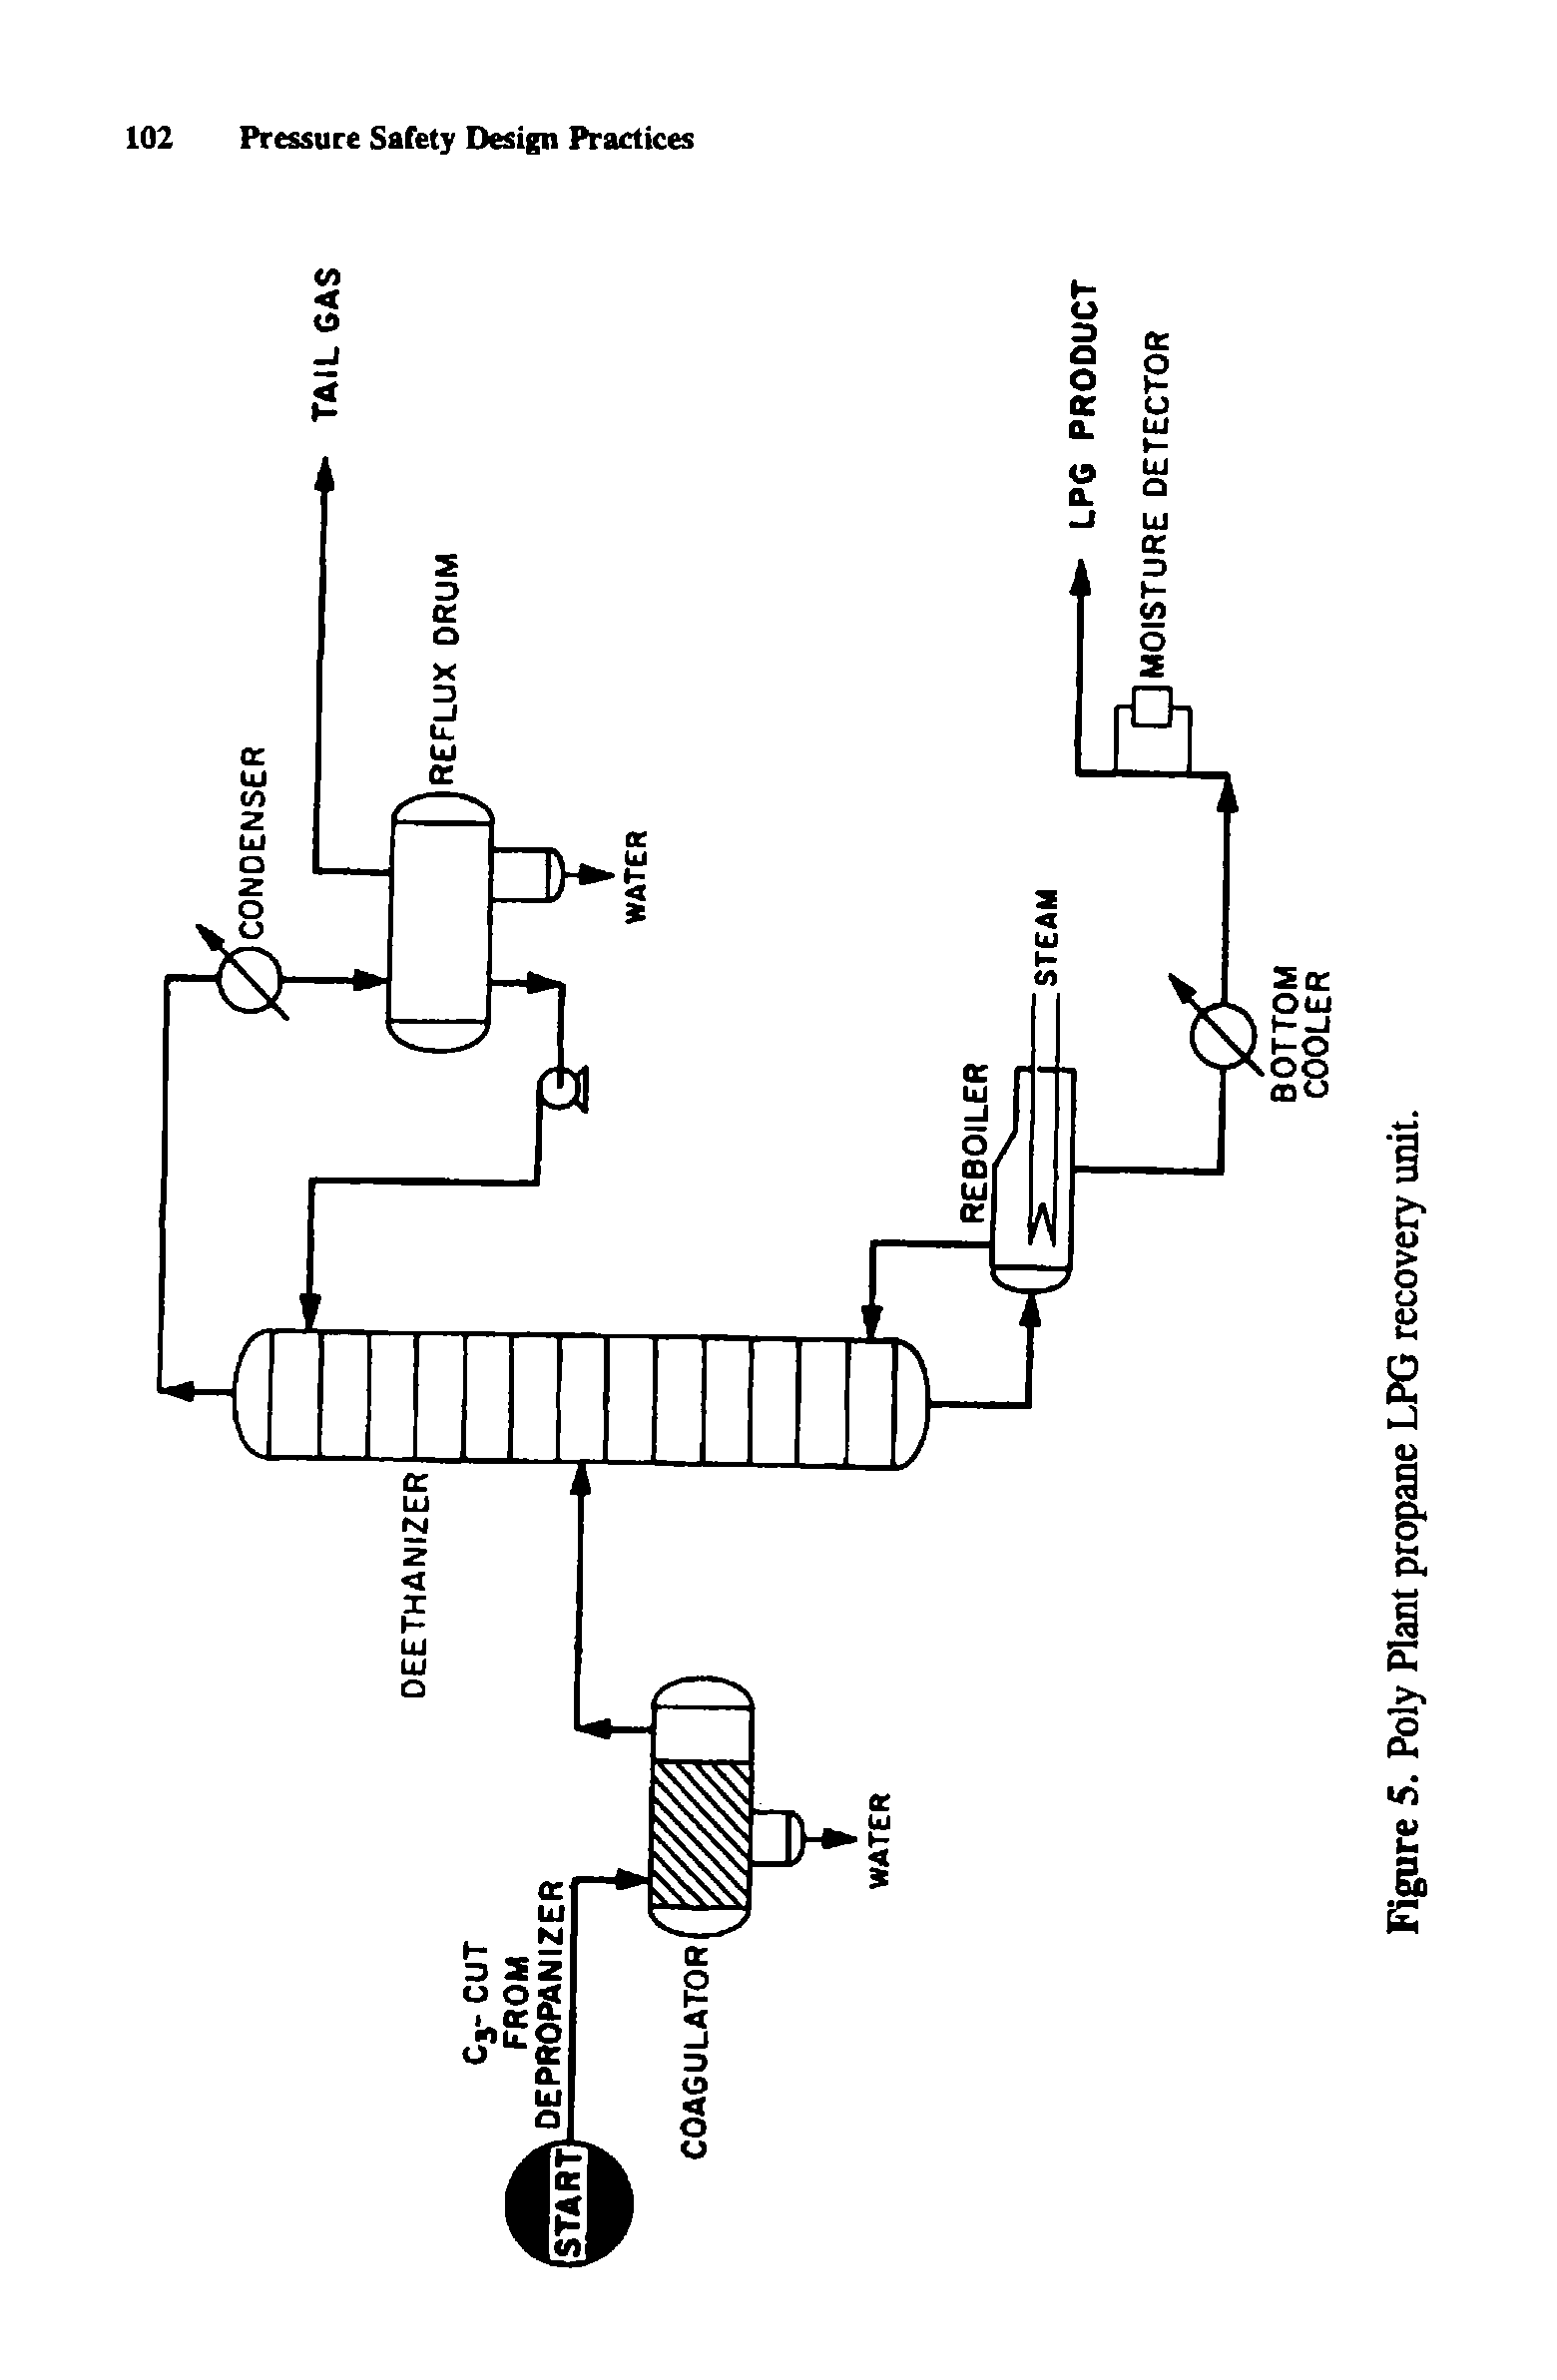 Figure 5. Poly Plant propane LPG recovery unit.